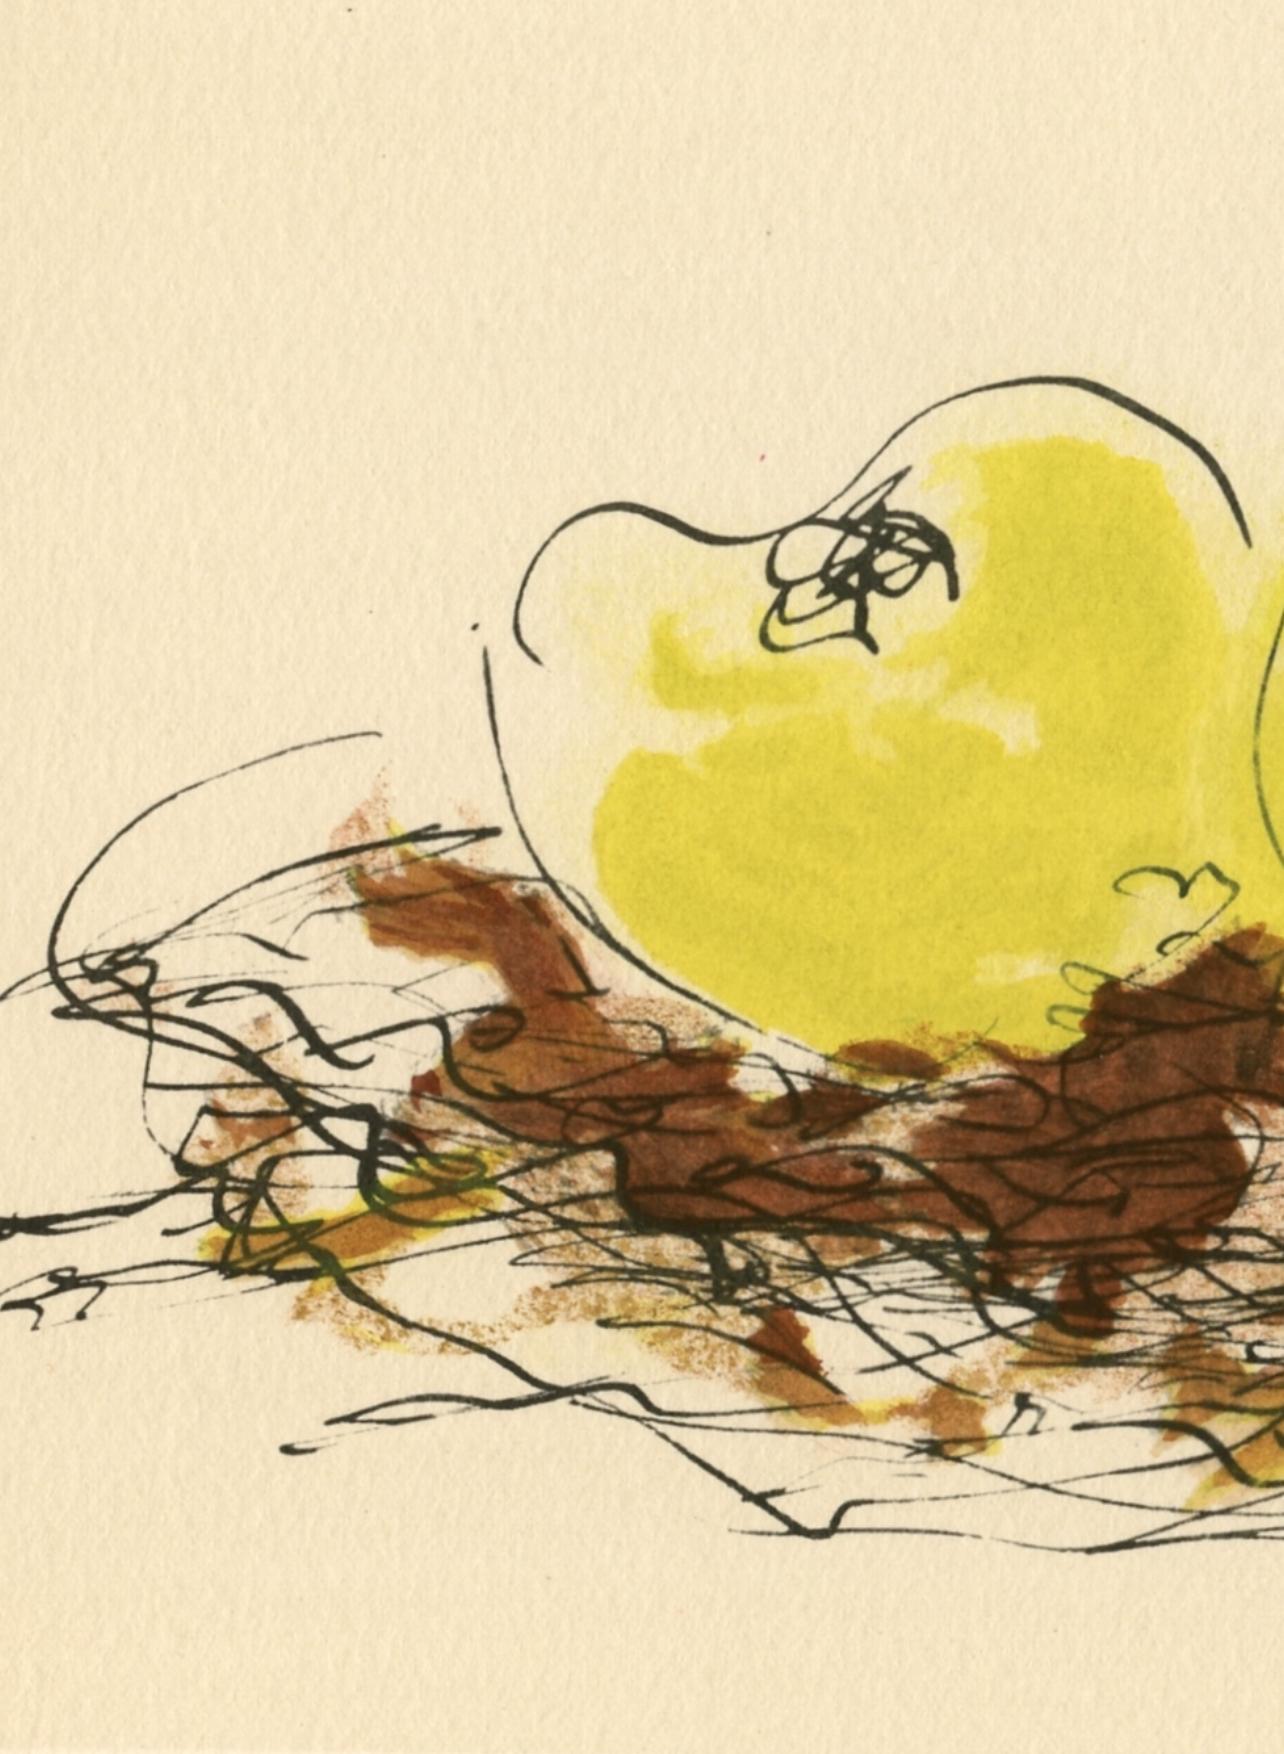 Braque, Pommes, Georges Braque le solitaire (after) For Sale 1